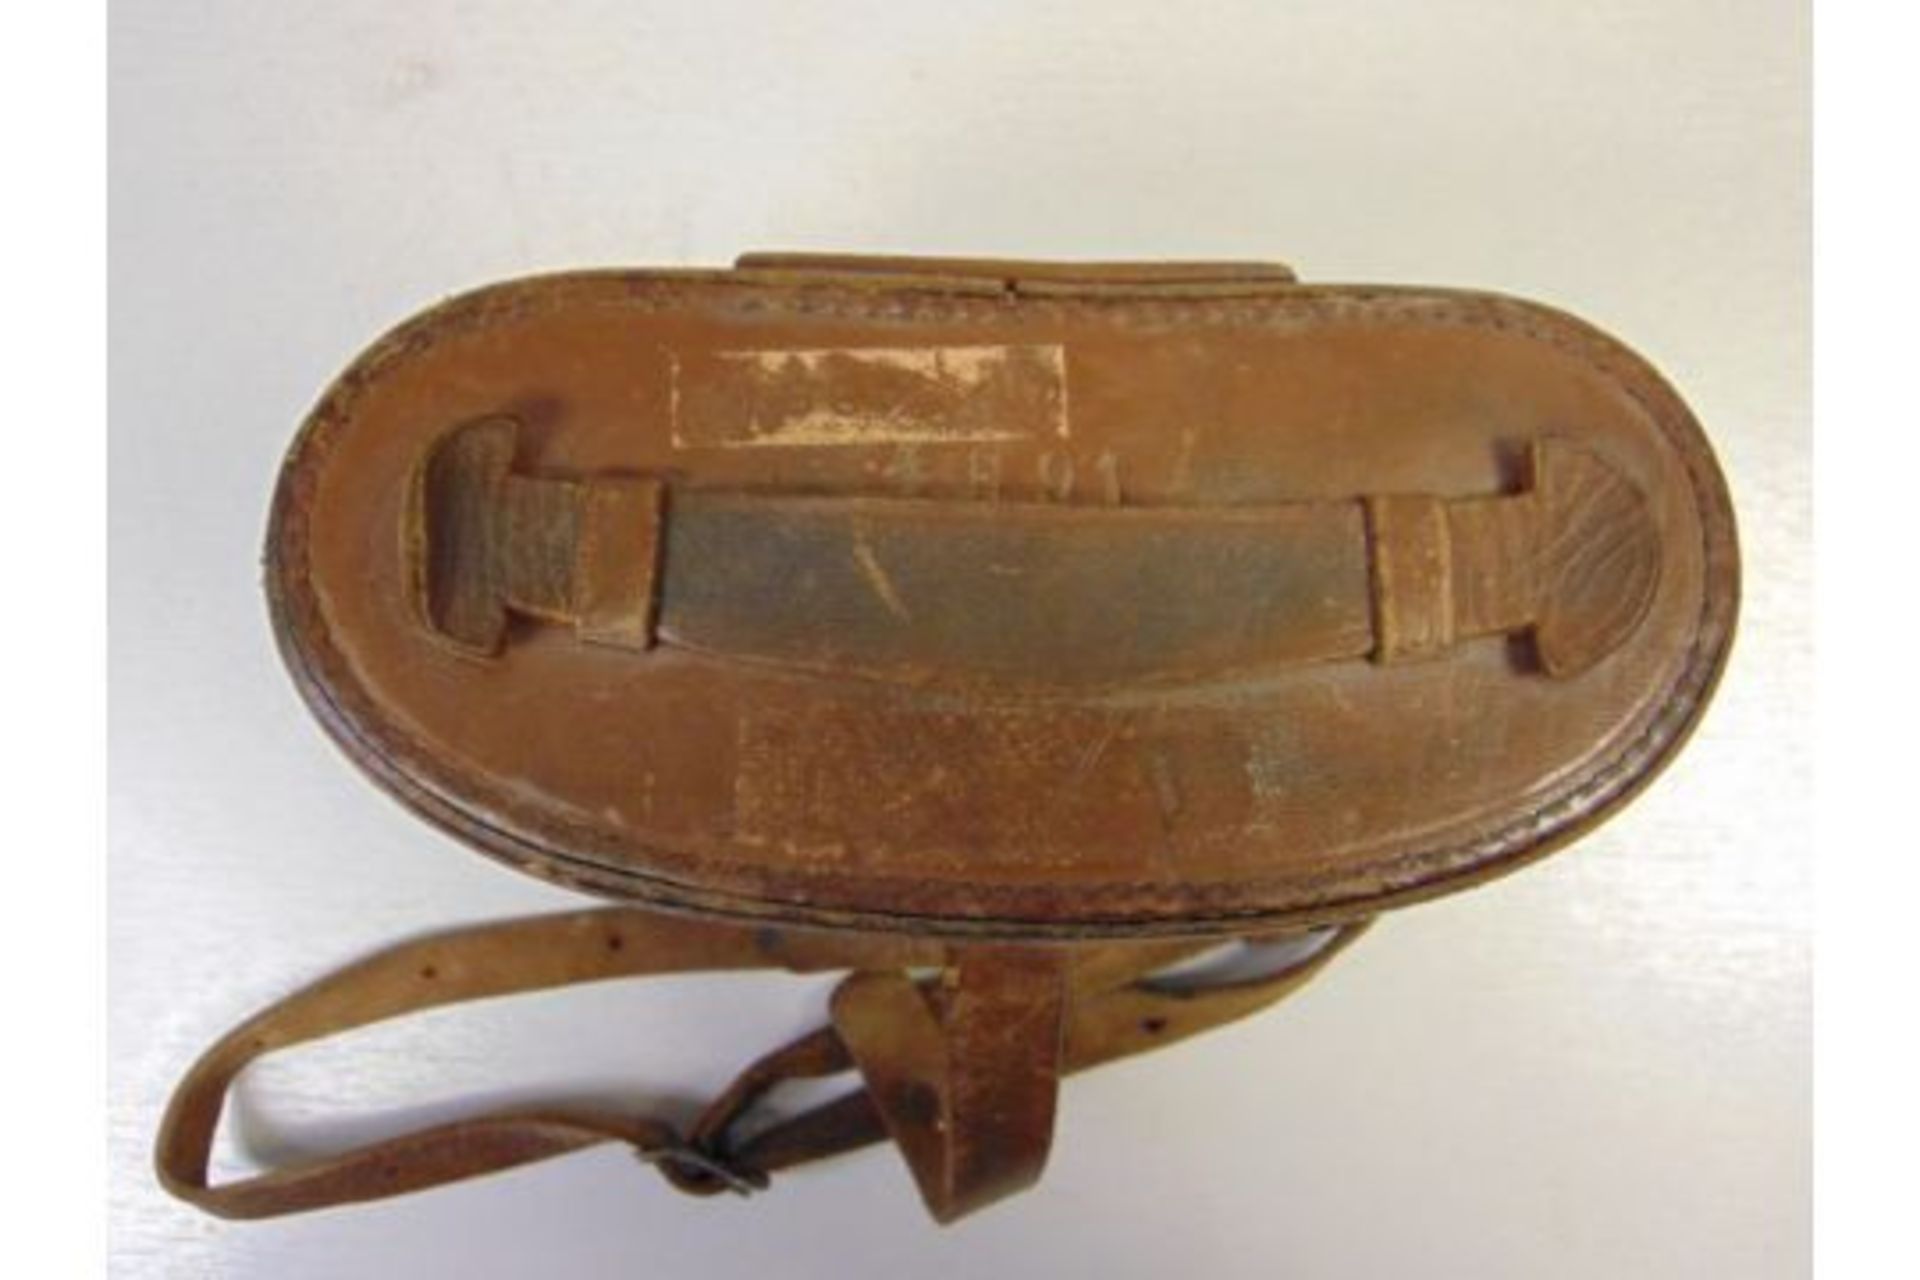 NIFE 6 x 30 Binoculars in Original Leather Case dated 1948 - Image 9 of 9